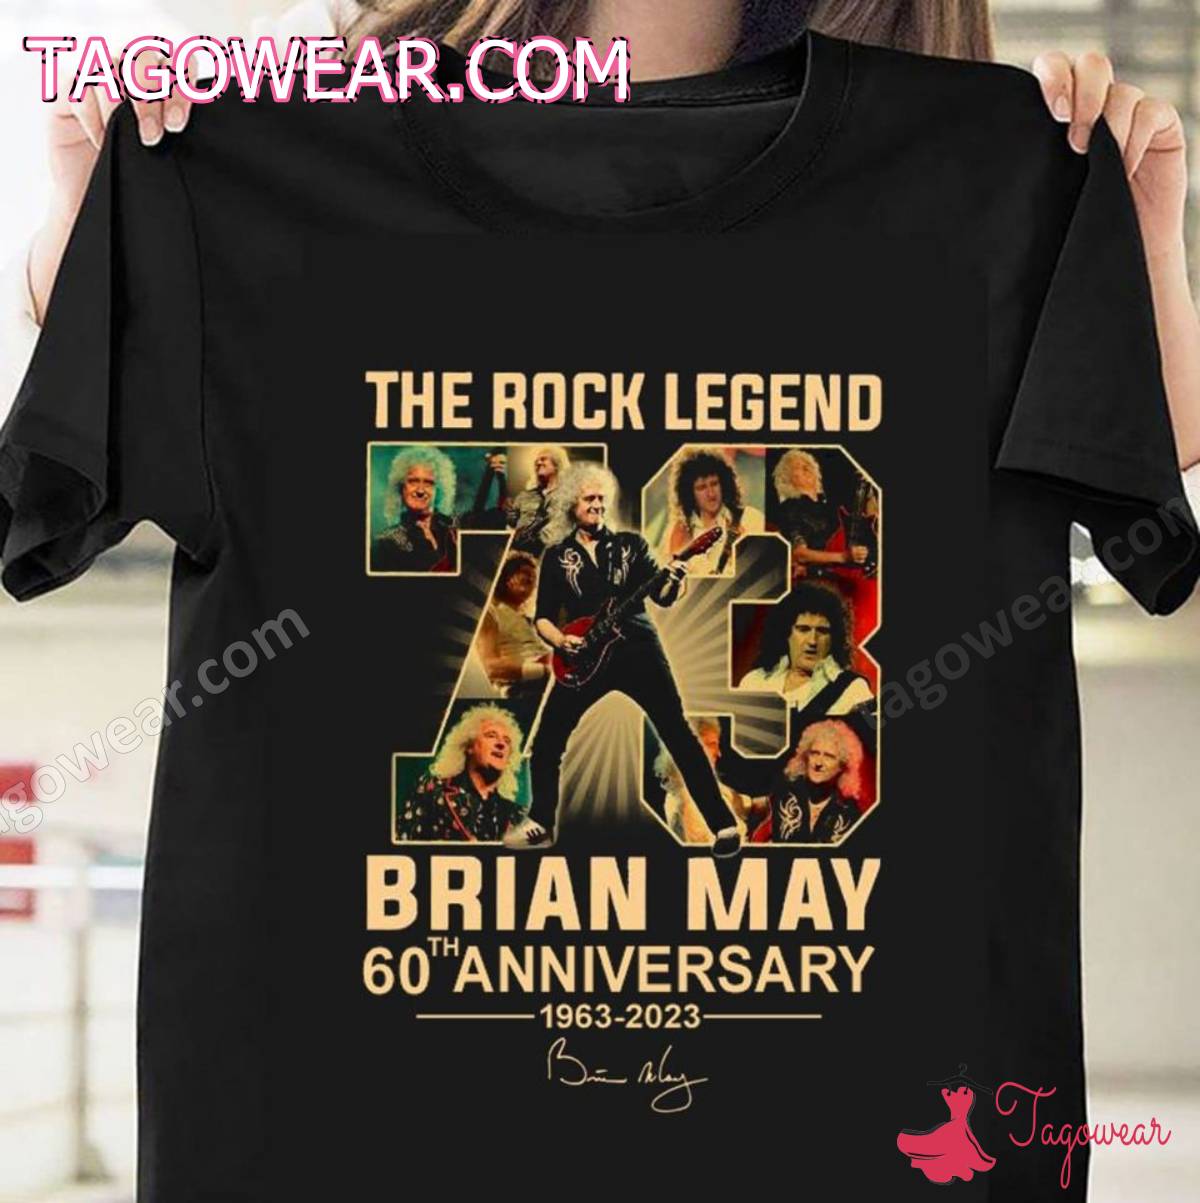 The Rock Legend Brian May 60th Anniversary 1963-2023 Signature Shirt